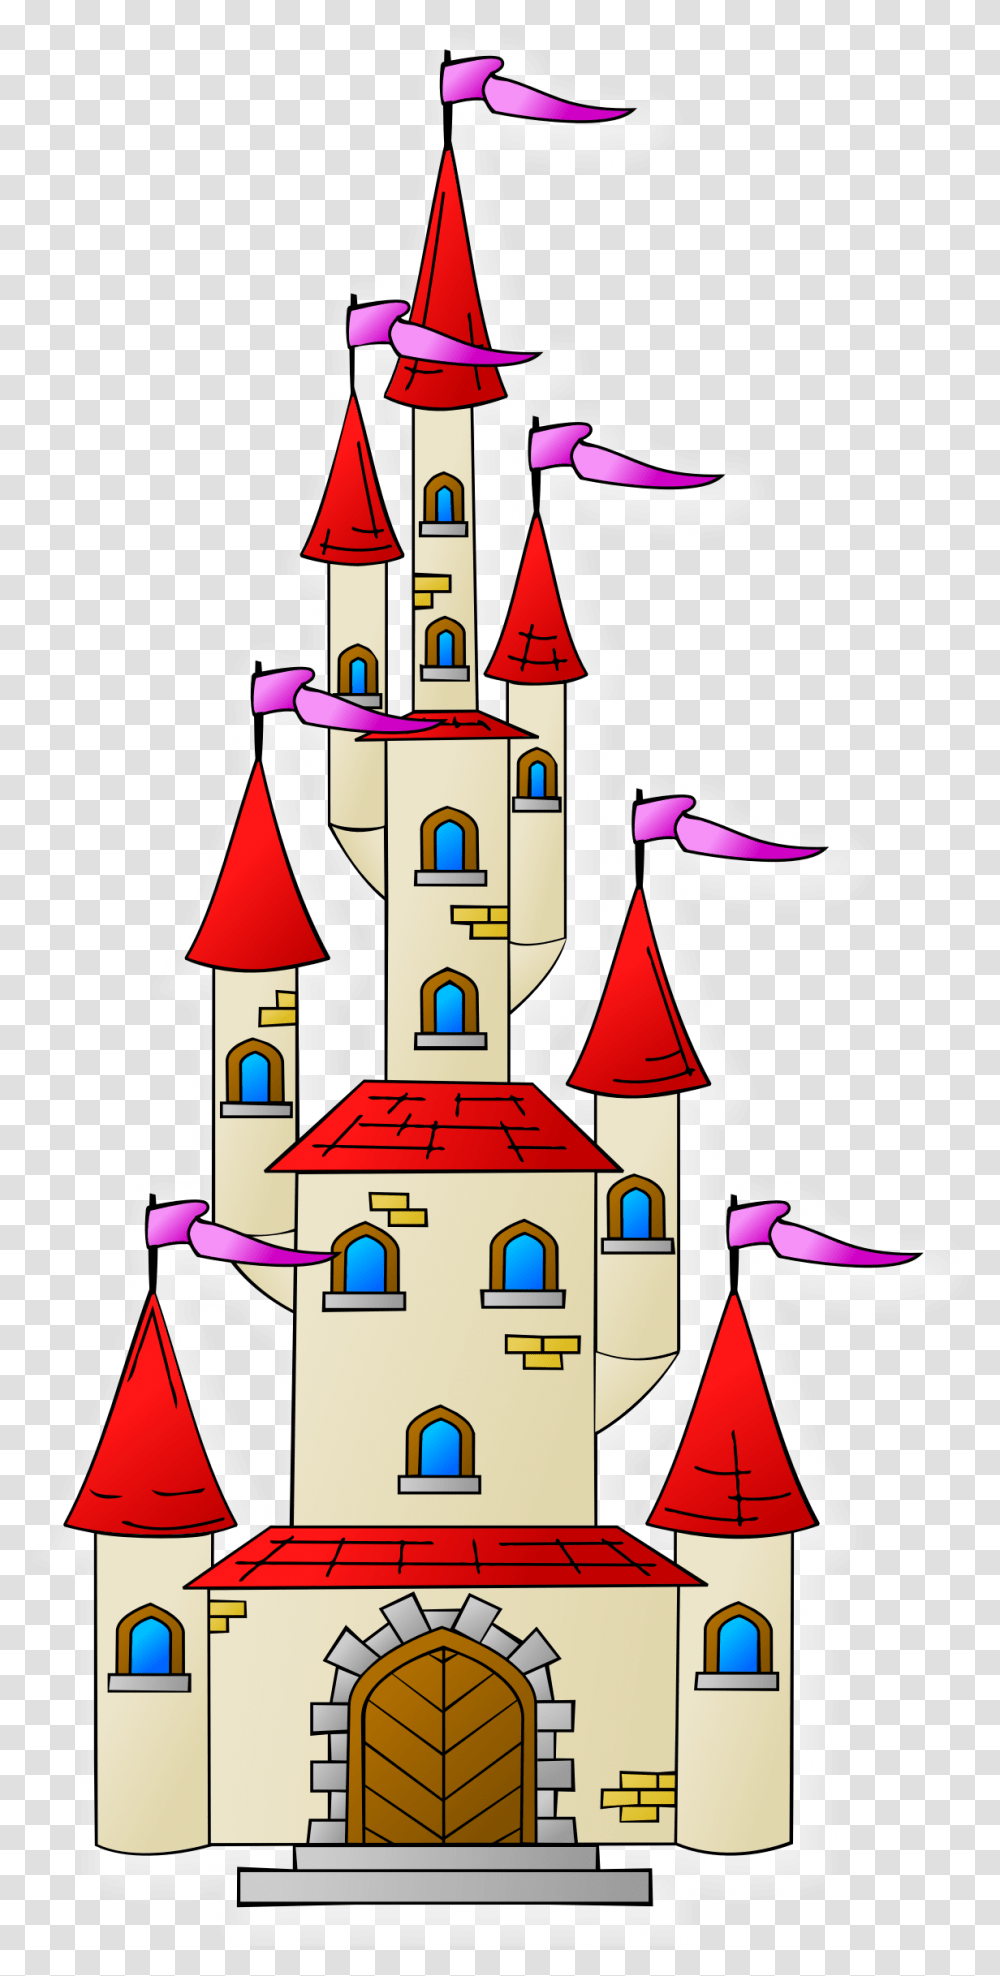 Cartoon Castle Castle Cliparts, Tower, Architecture, Building, Bell Tower Transparent Png